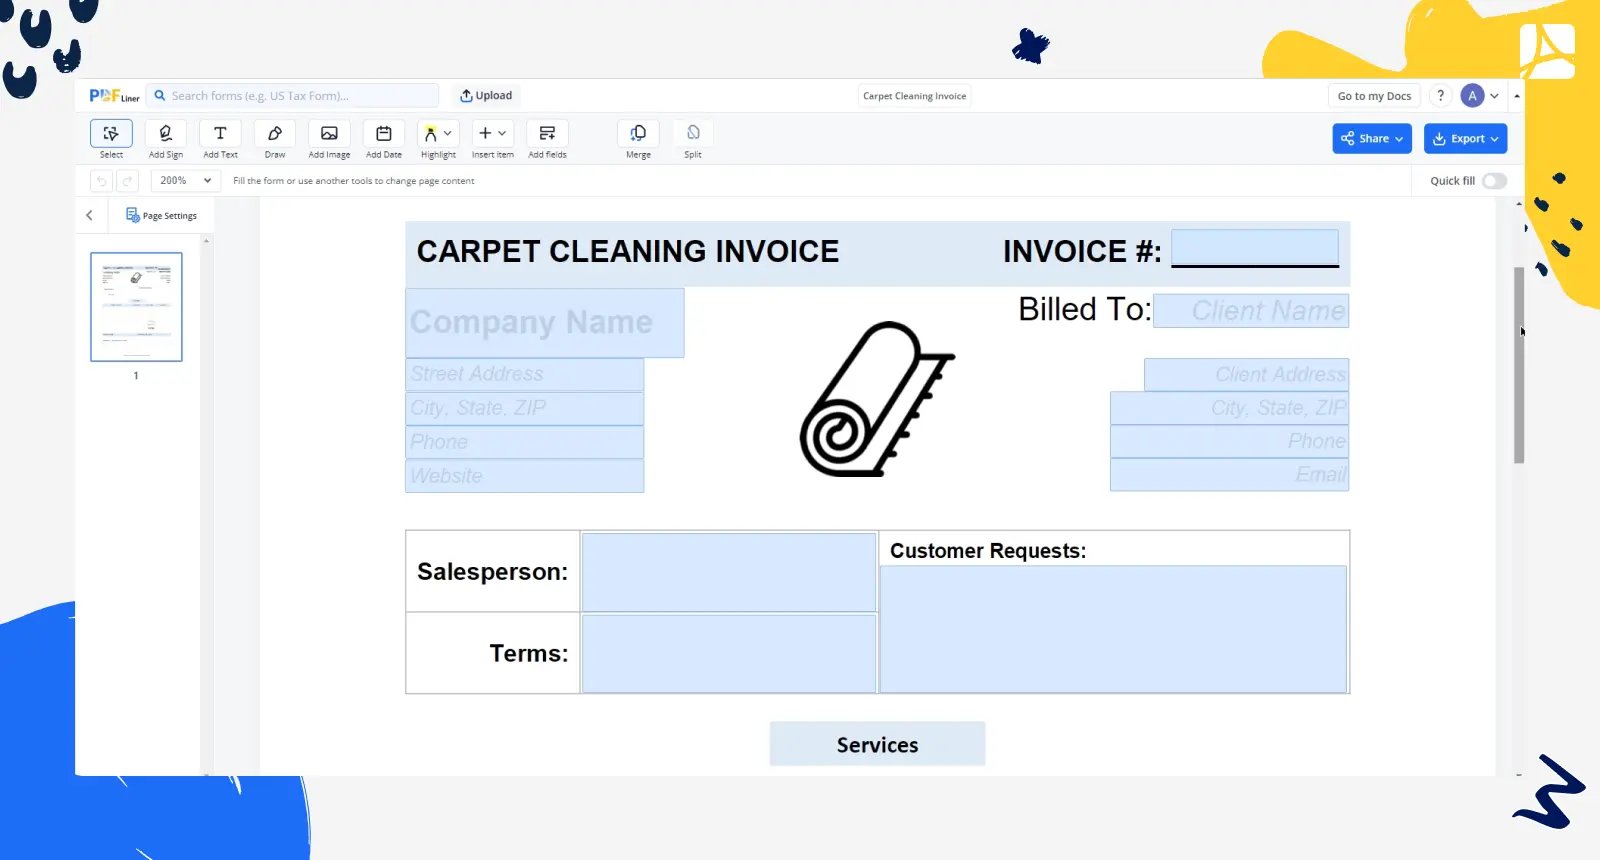 Carpet Cleaning Invoice screenshot